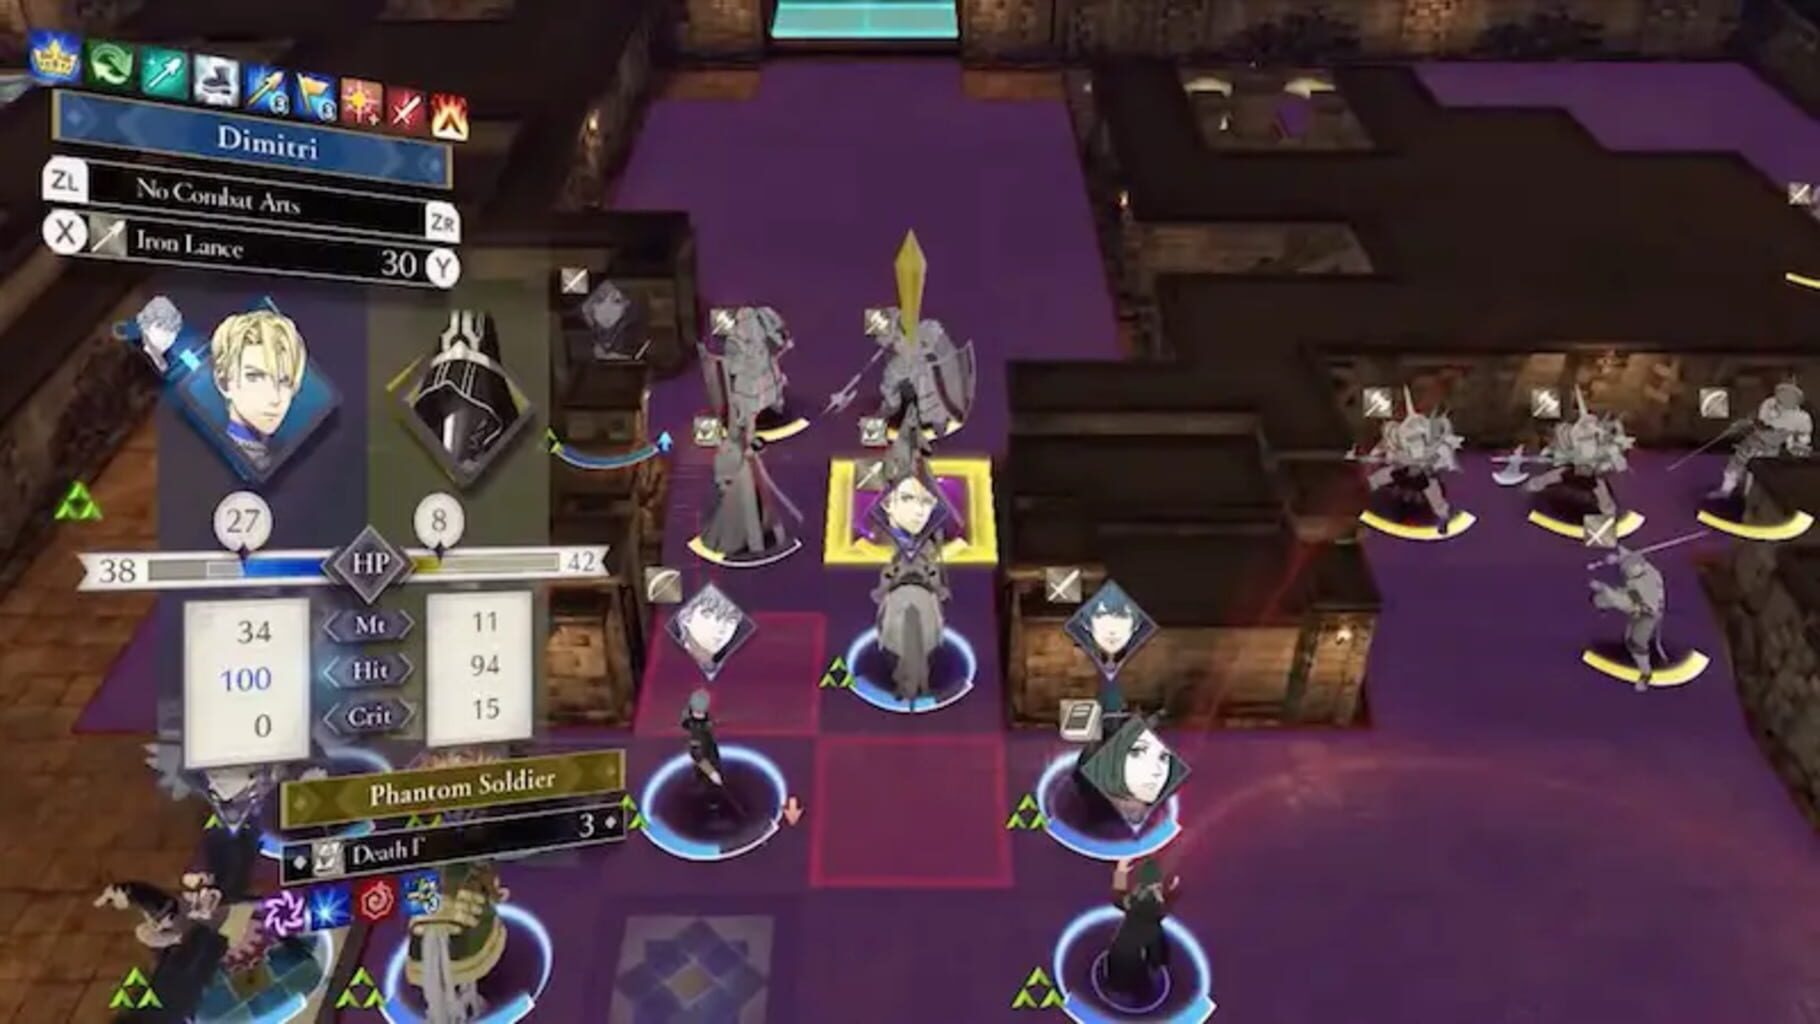 Fire Emblem: Three Houses - Cindered Shadows screenshot